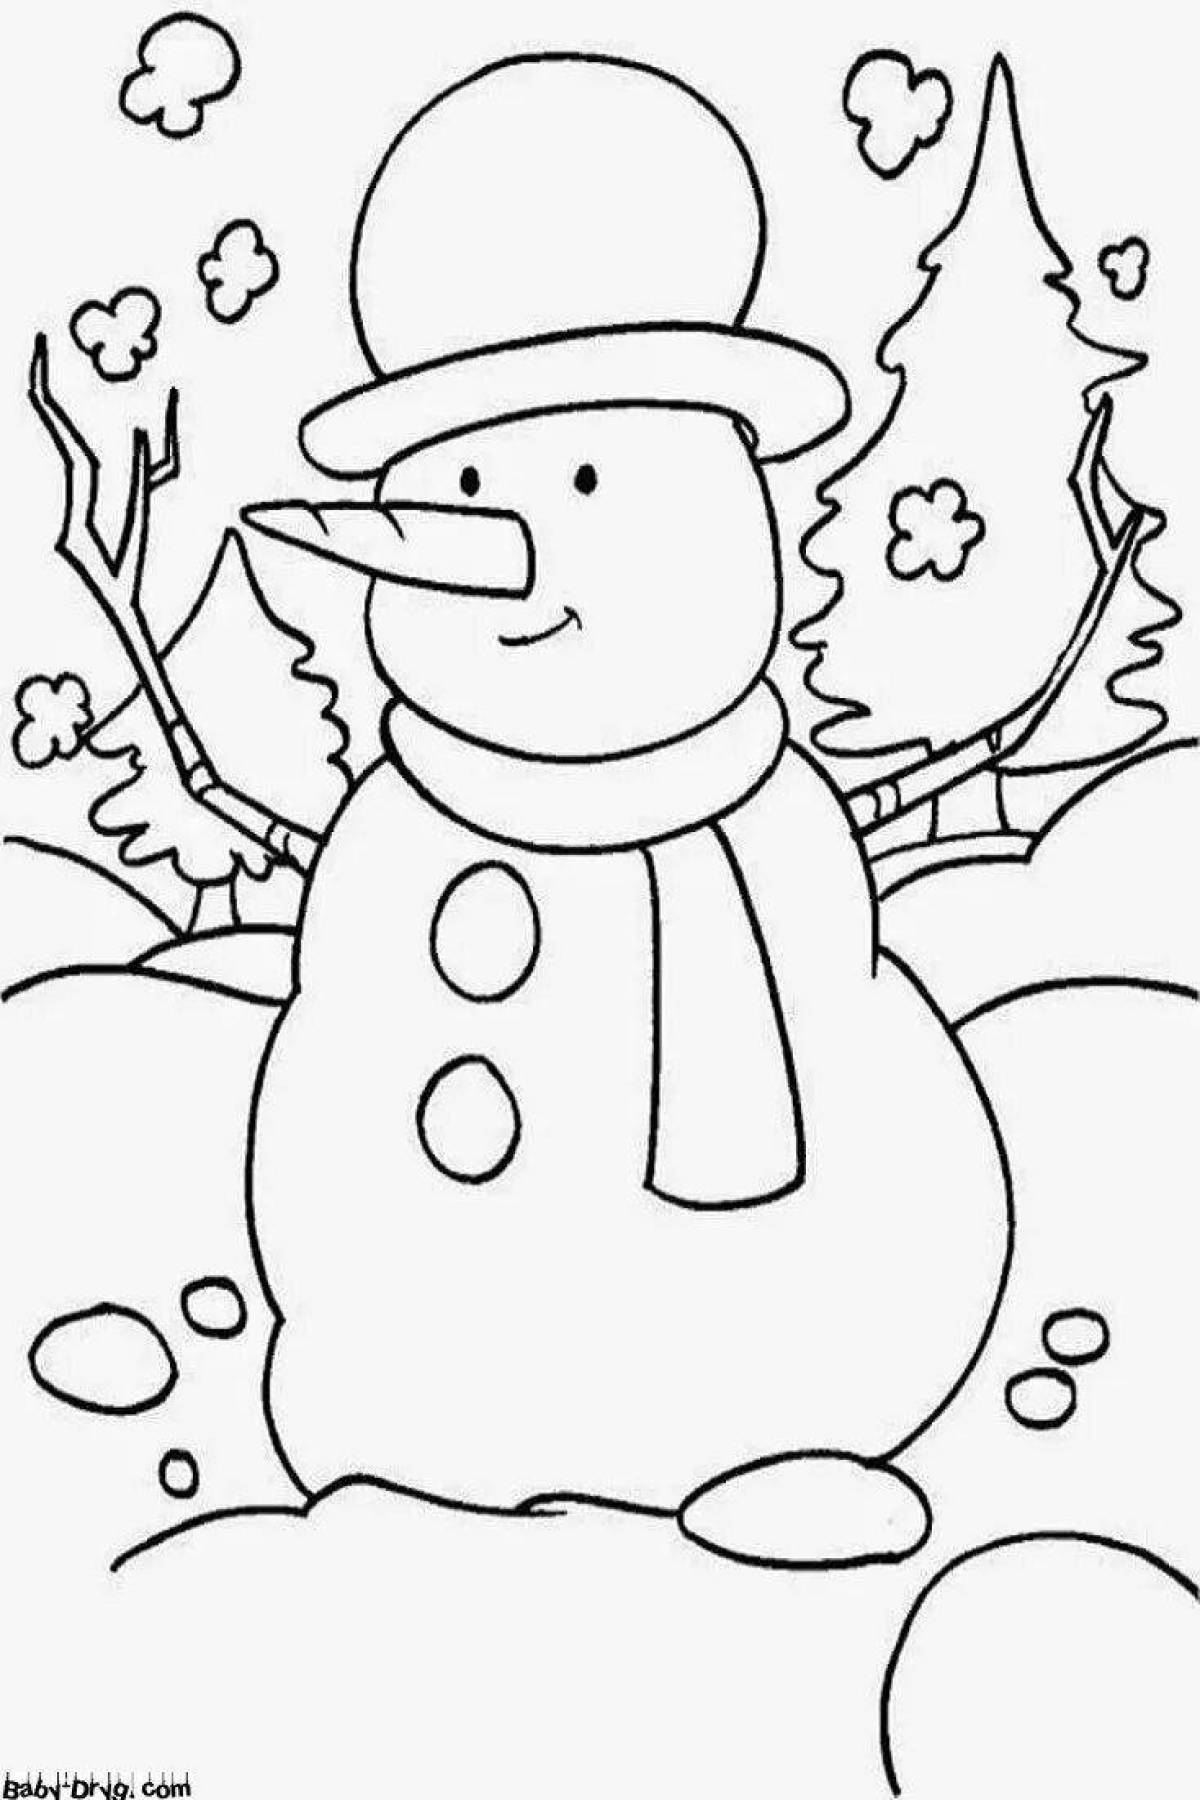 Coloring book glowing mega snowman